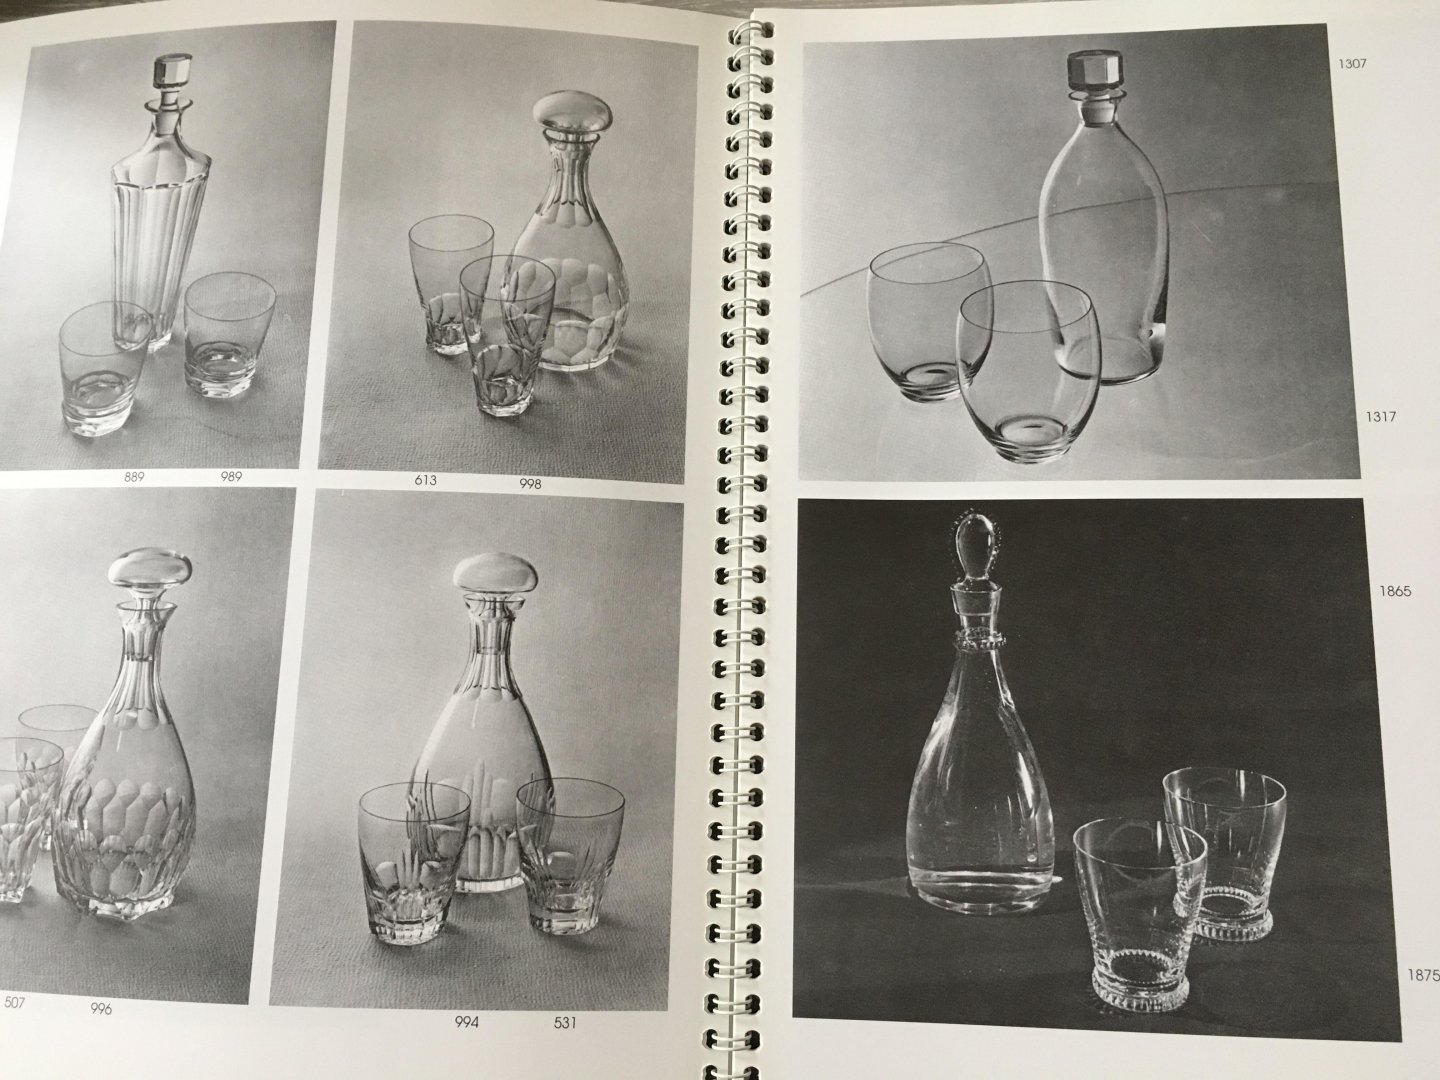 P. Mual - Crystal Leerdam, catalogus 1948, gewijzigde herdruk 1999, design gedocumenteerd 3